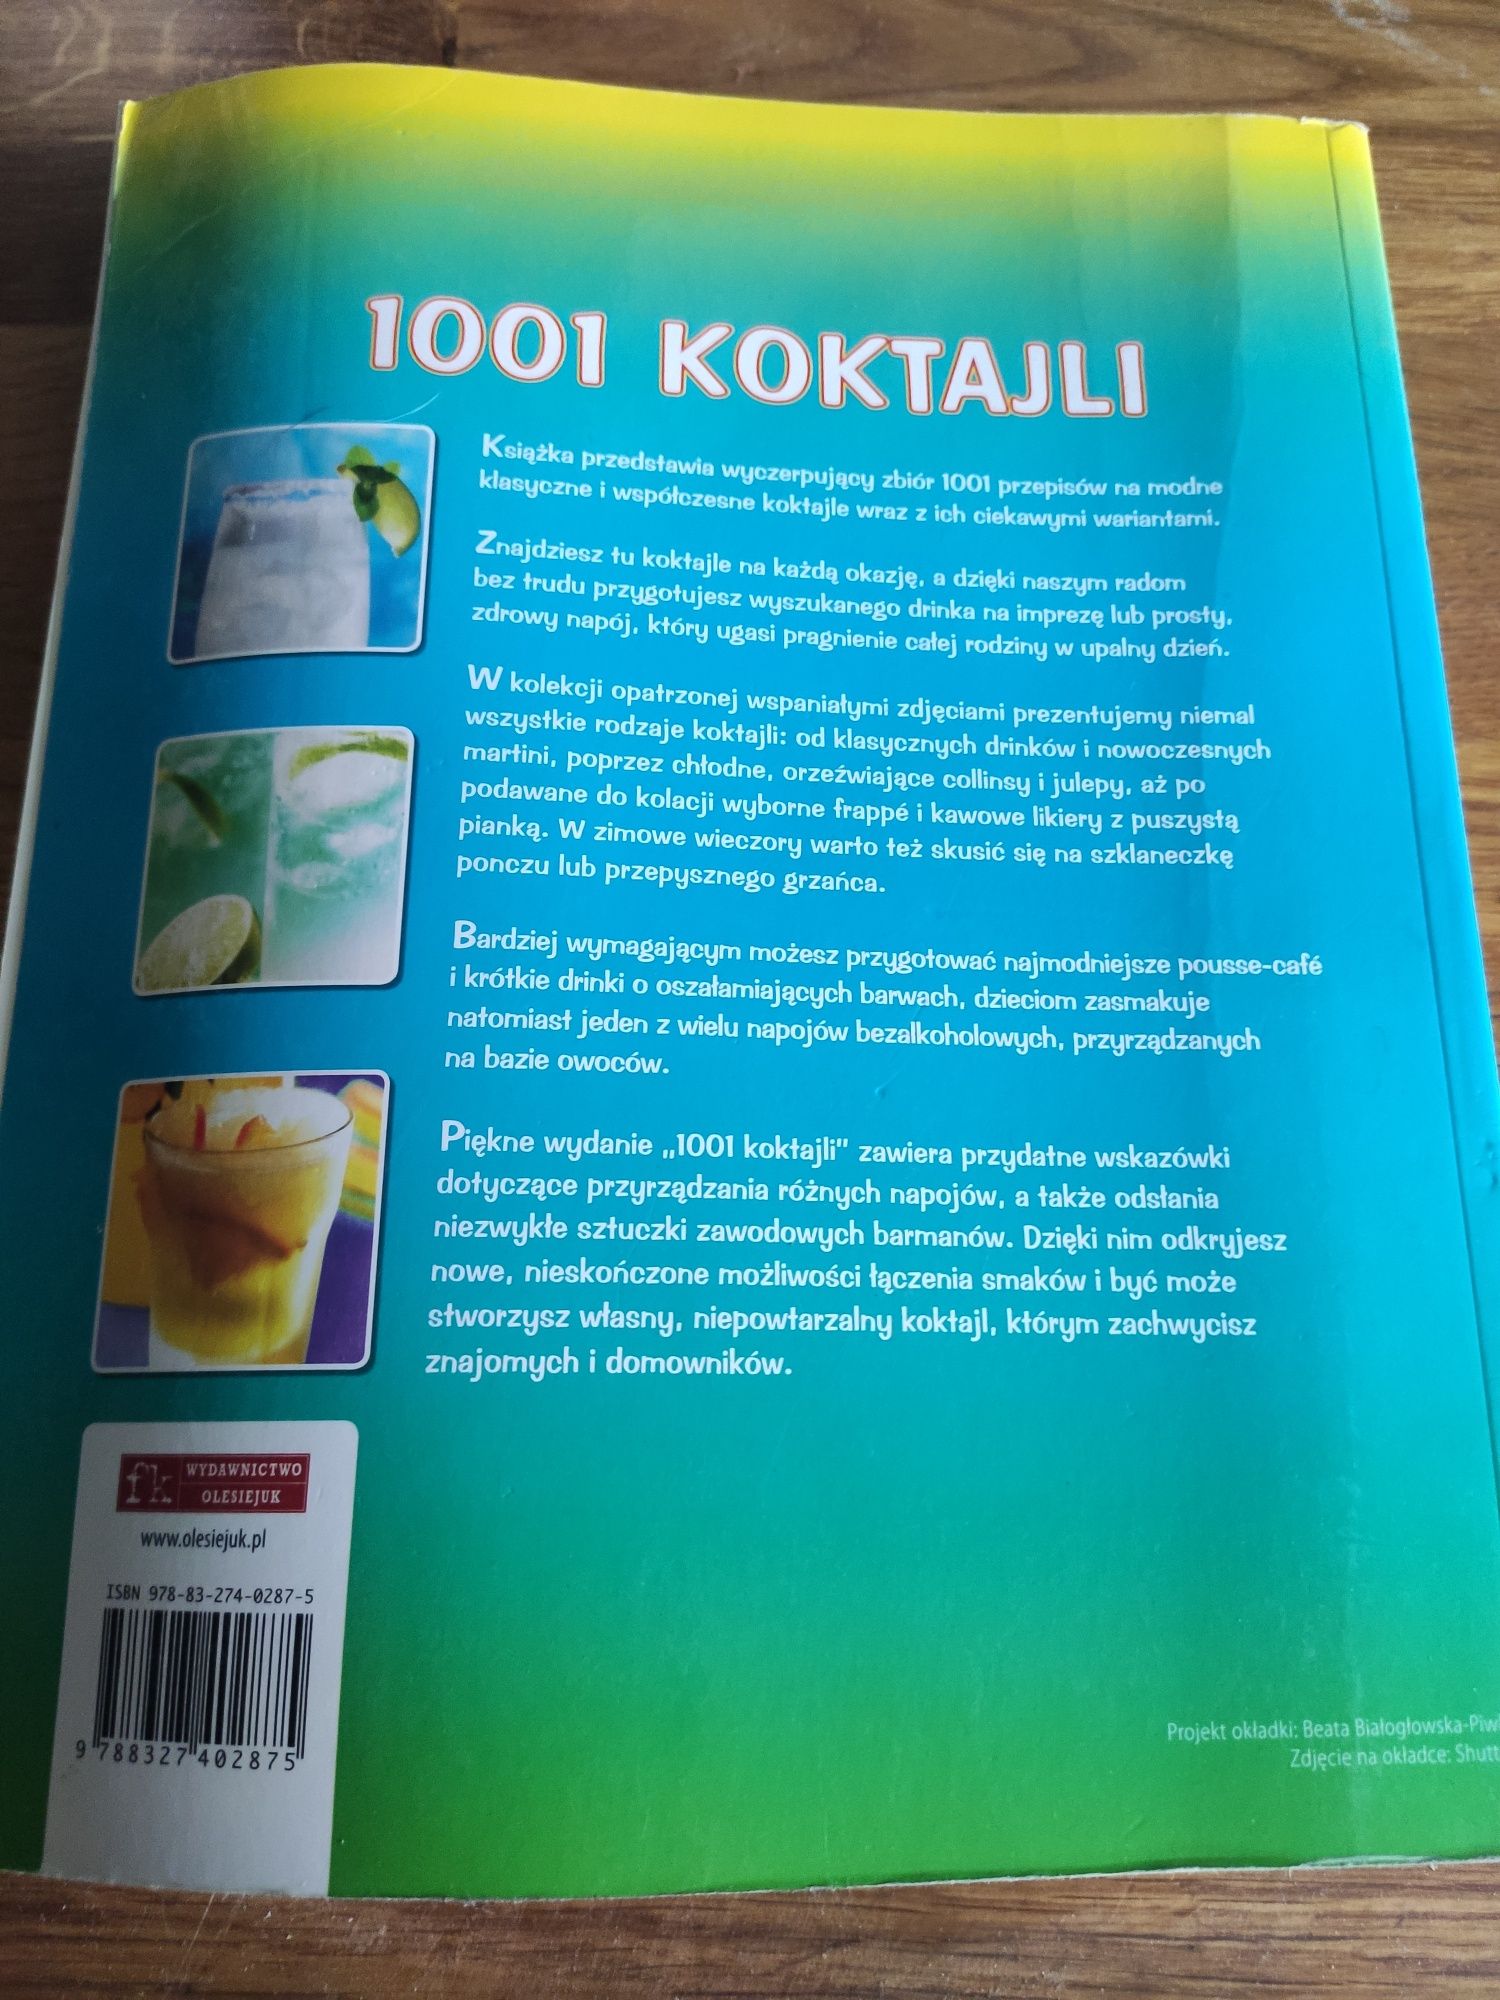 1001 koktajli album książka zdjęcia drinki